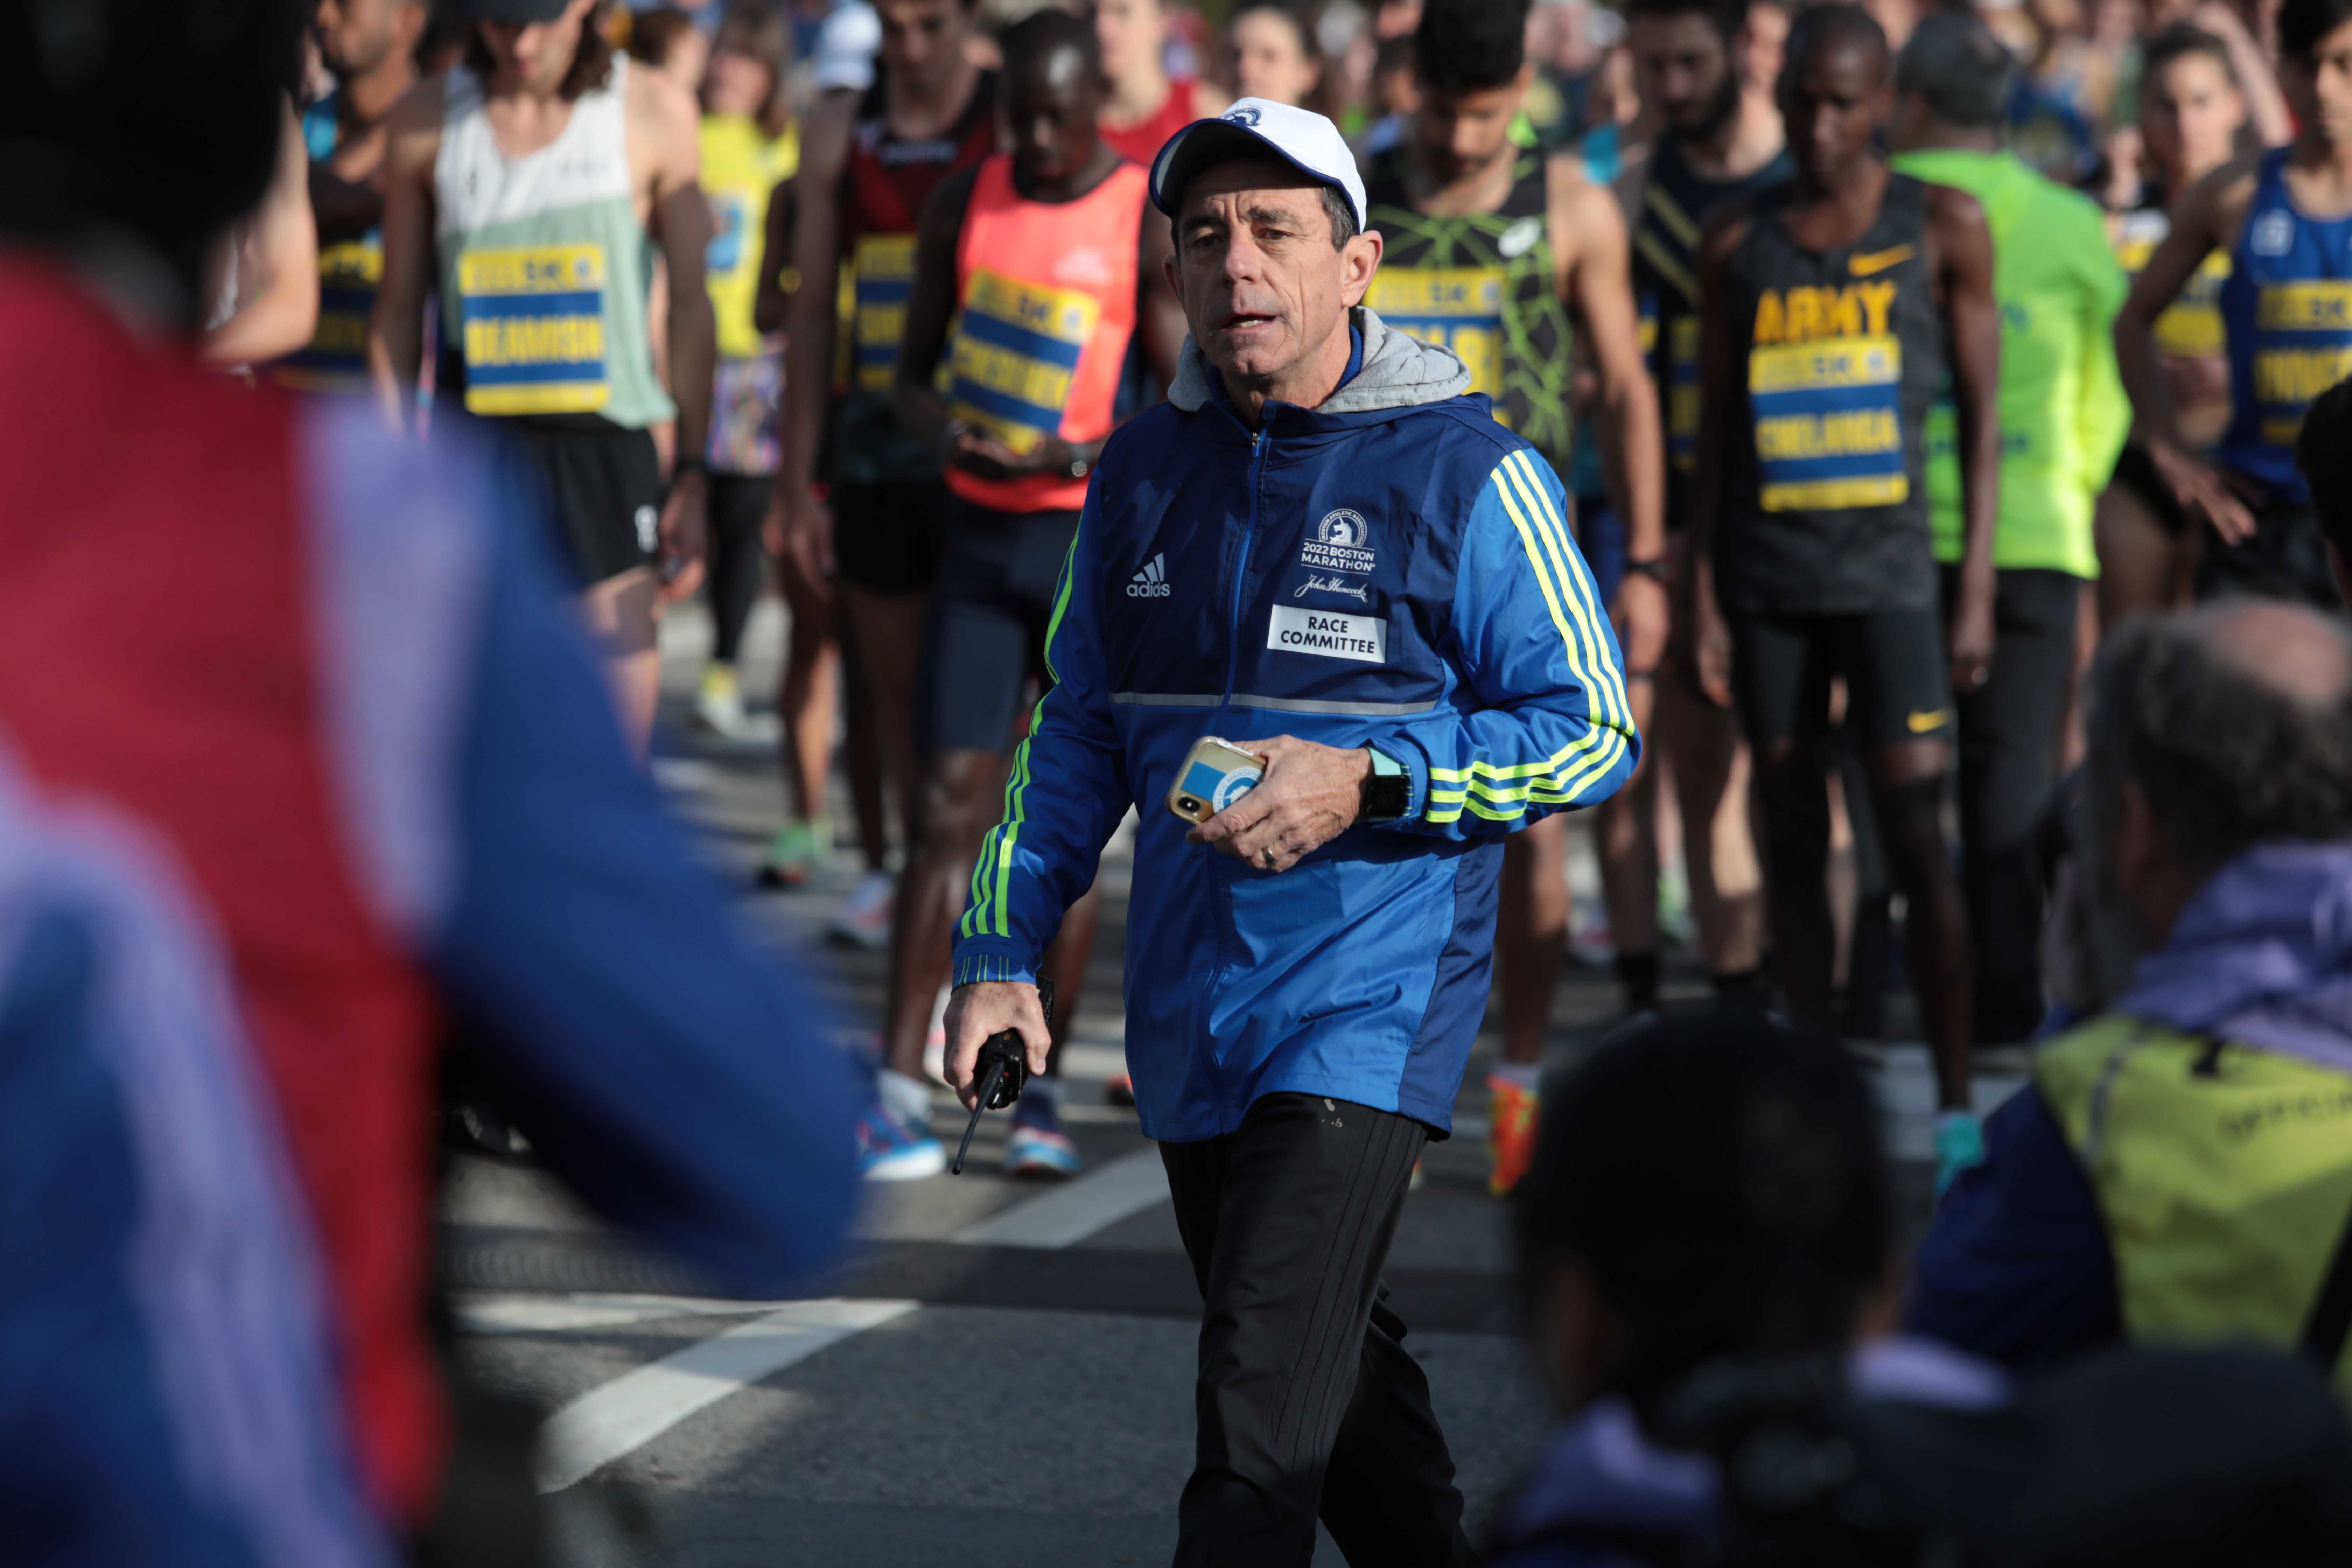 The Boston Marathon Jacket Design Sucks. We (Runners) Deserve Better. — The  Directive Collective